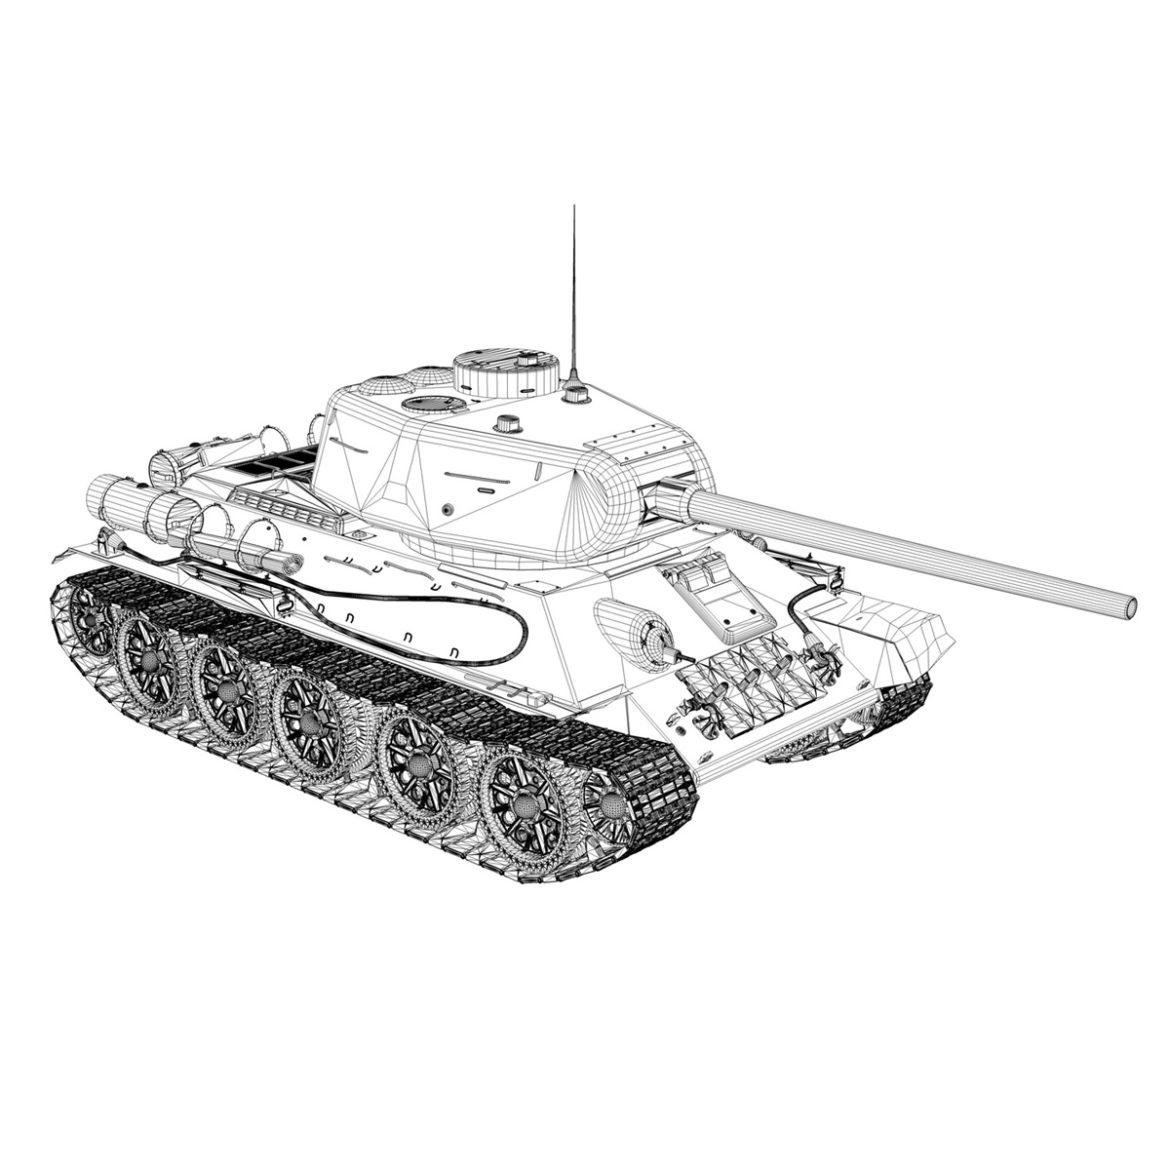 t-34 85 – soviet medium tank – 221 3d model 3ds fbx c4d lwo obj 294209